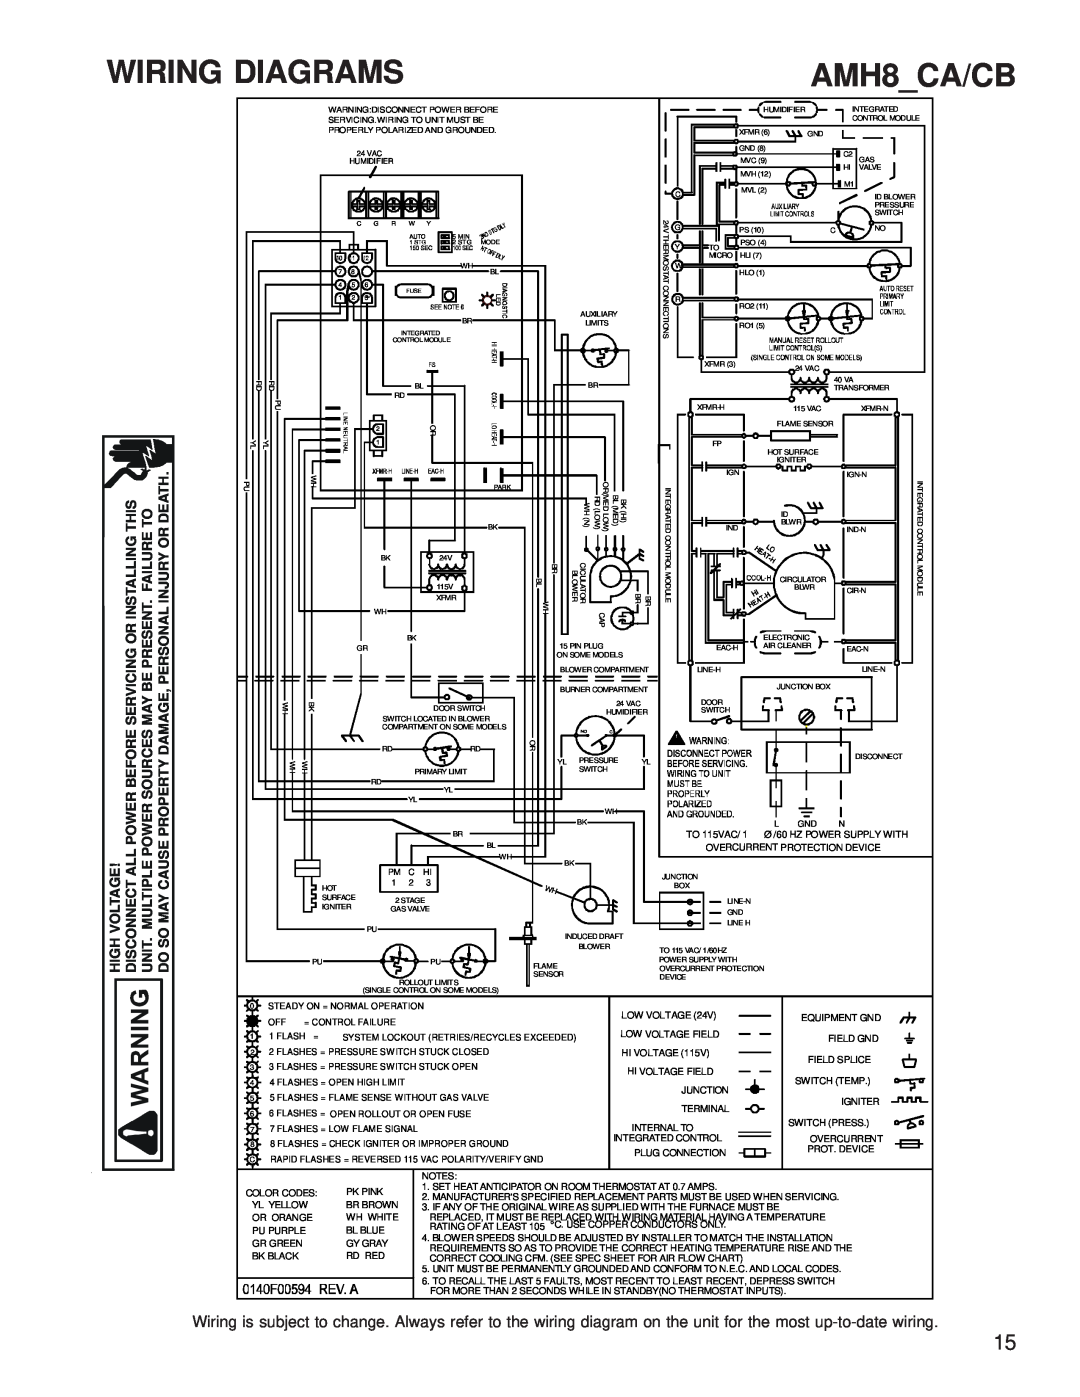 Amana AMH* service manual Wiring Diagrams, AMH8 CA/CB 